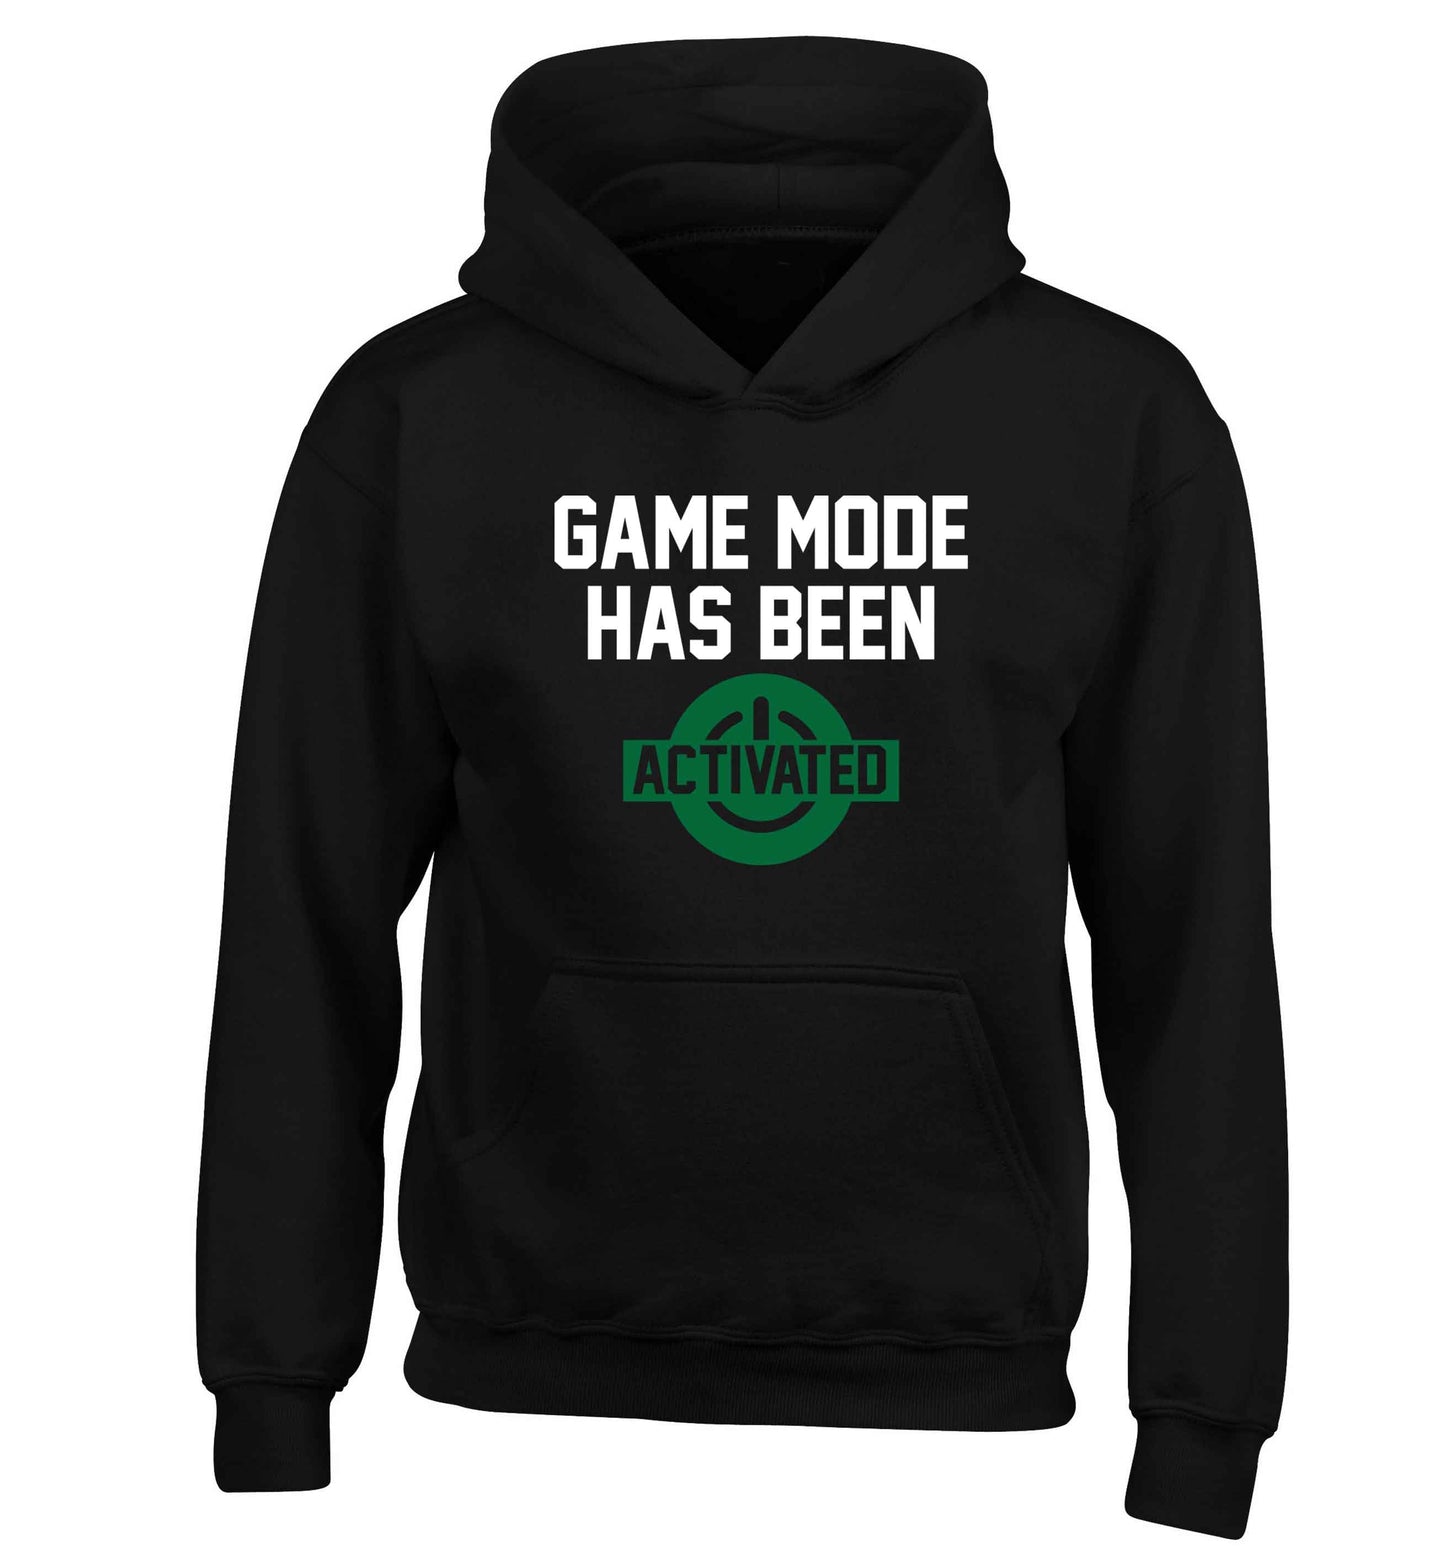 Game mode has been activated children's black hoodie 12-13 Years